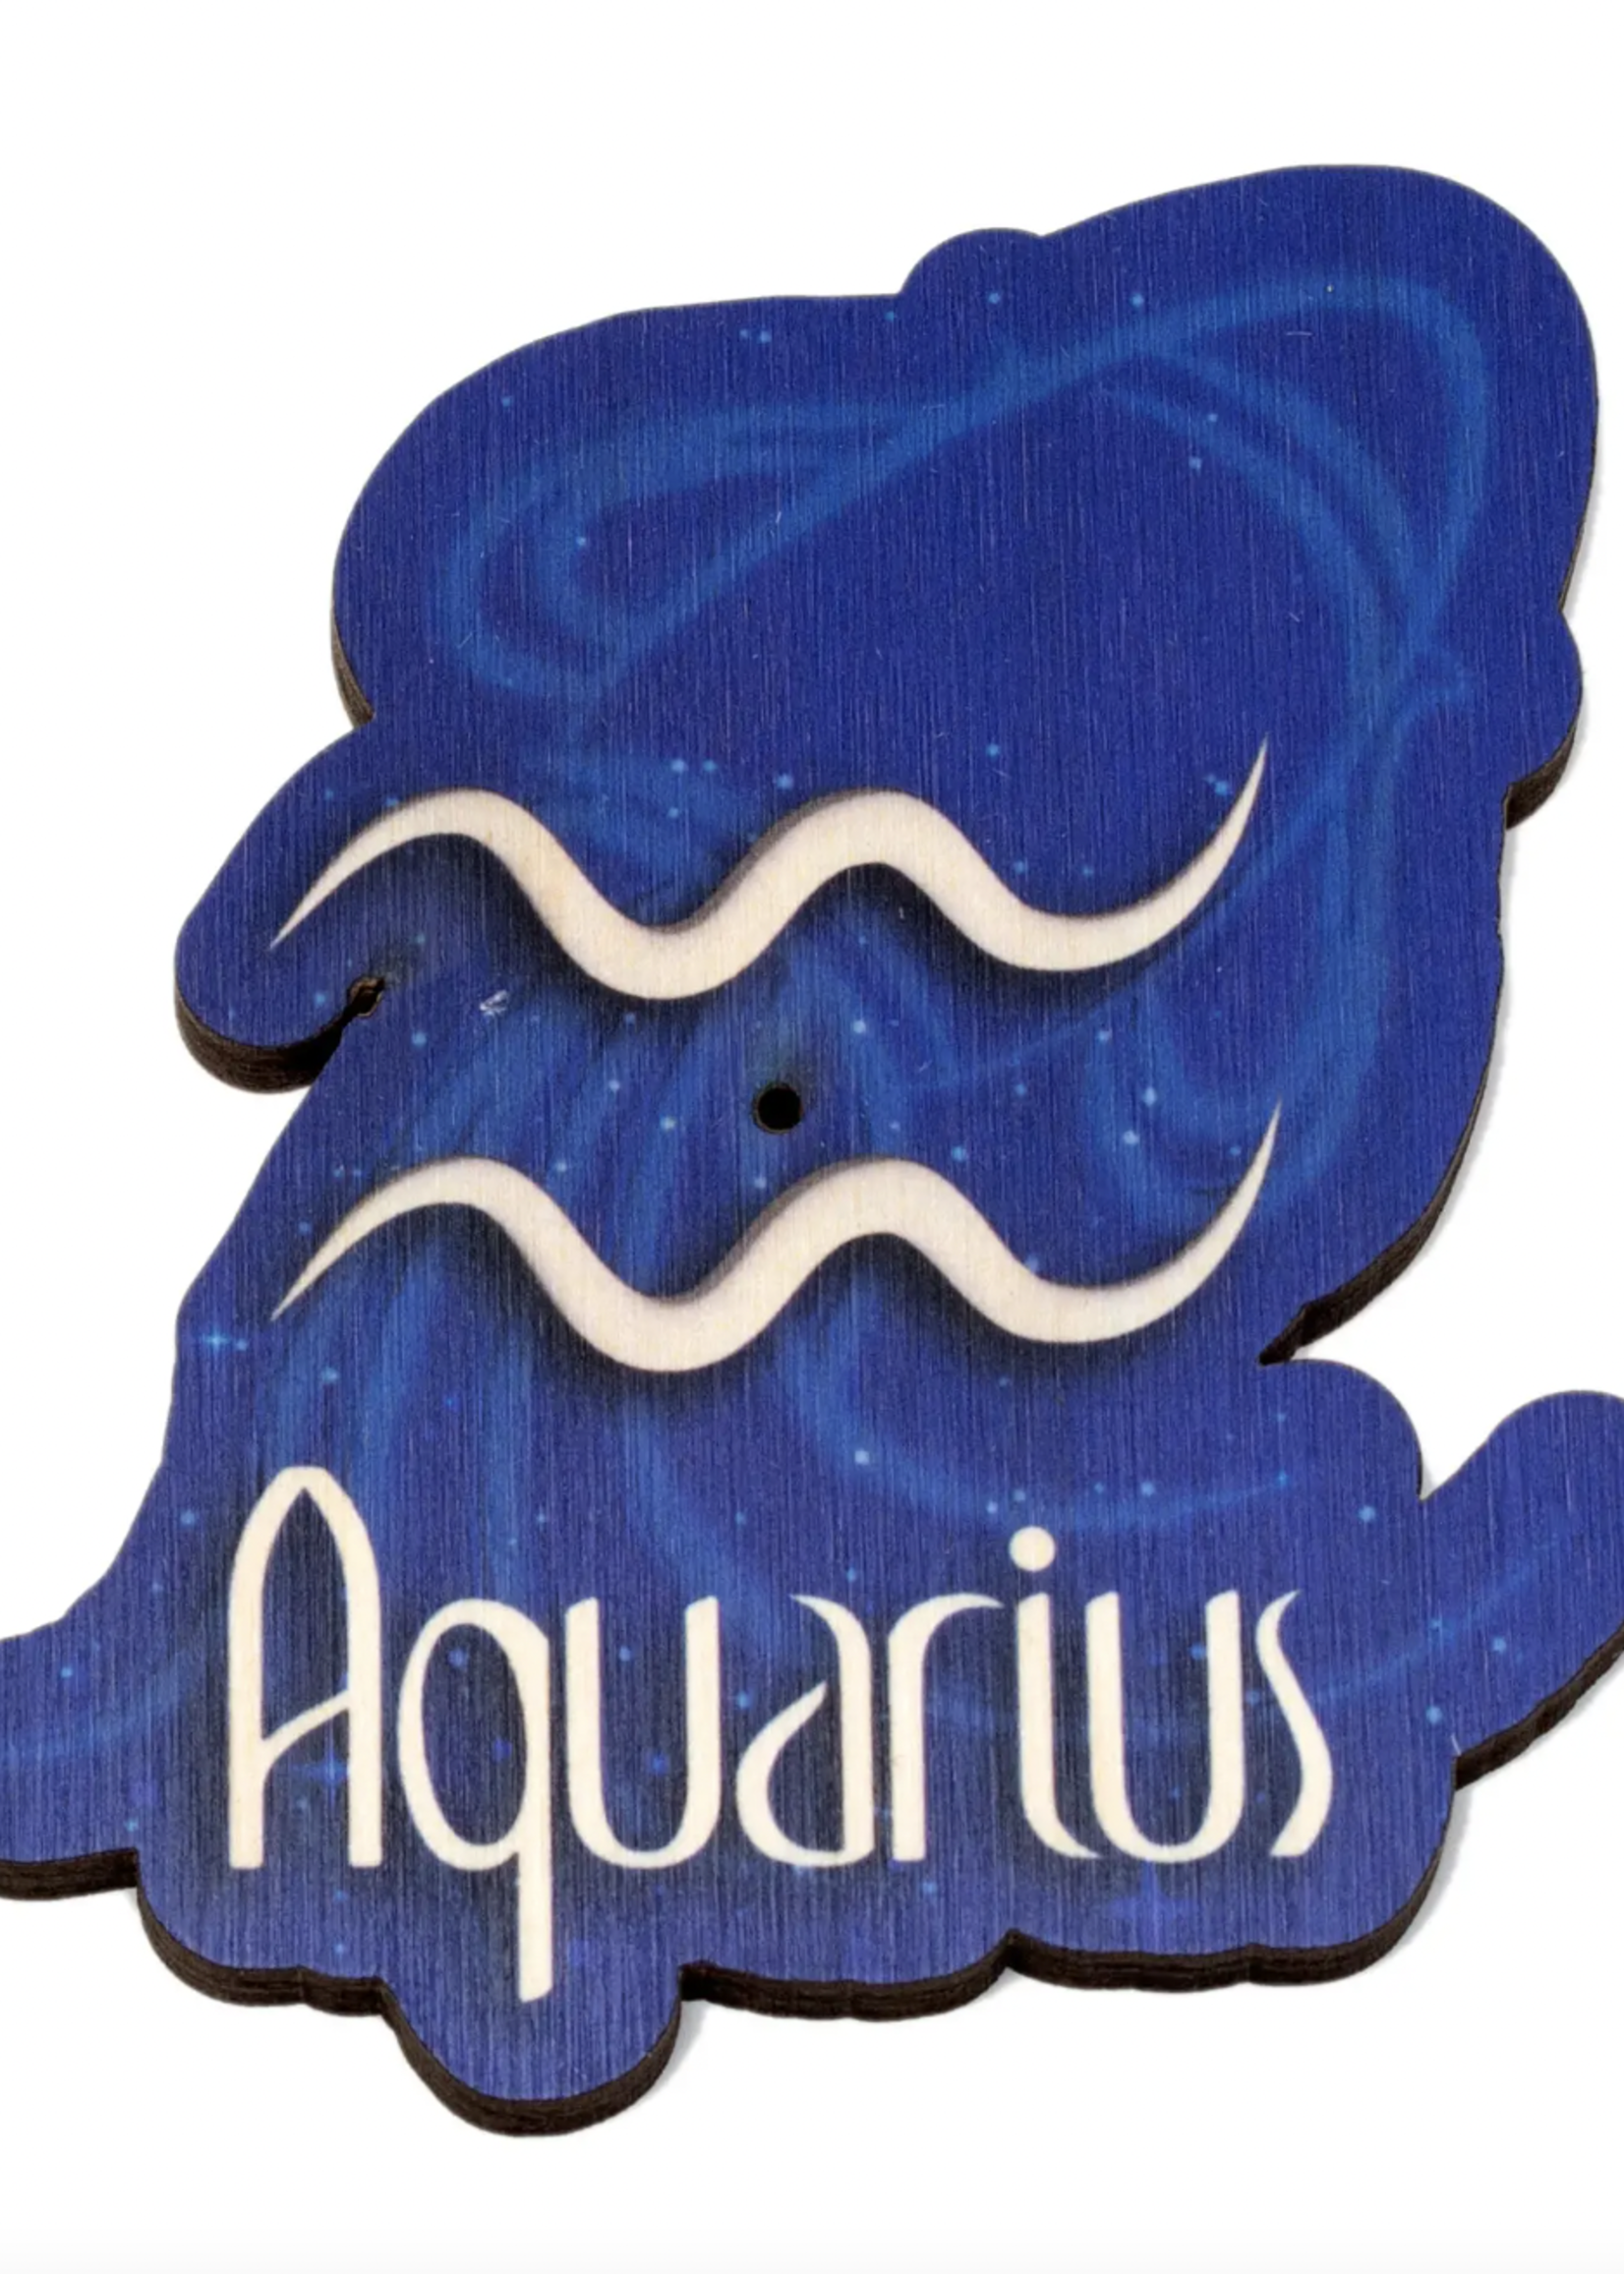 Most Amazing Aquarius Wooden Keychain